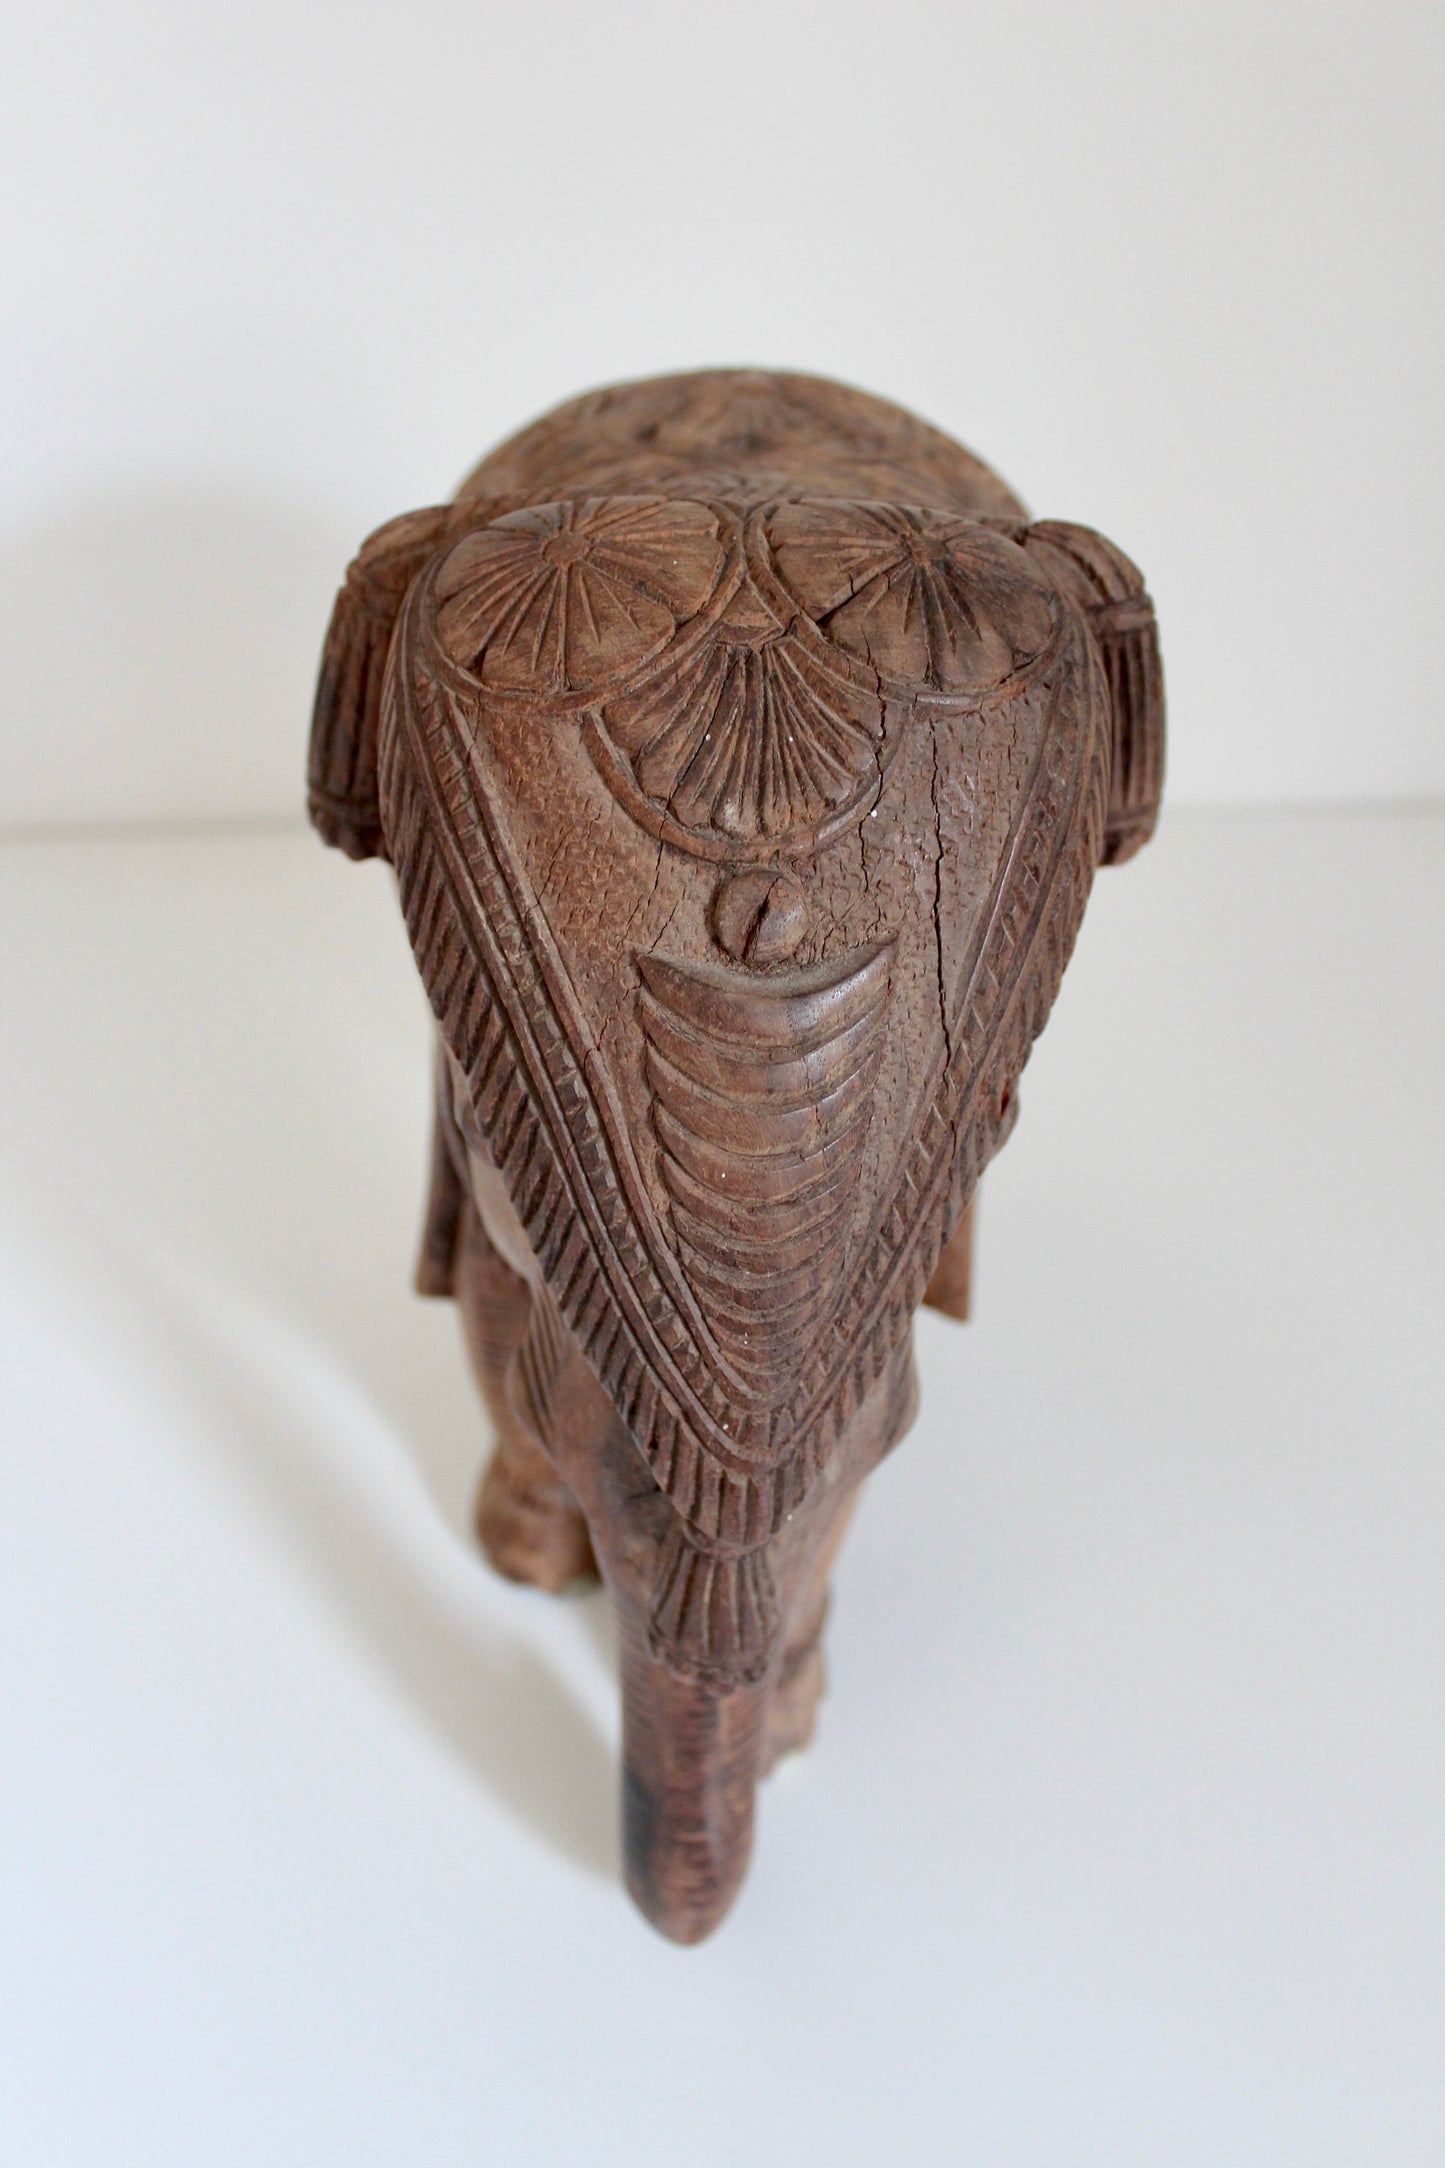 Antique Carved Wood Indian elephant